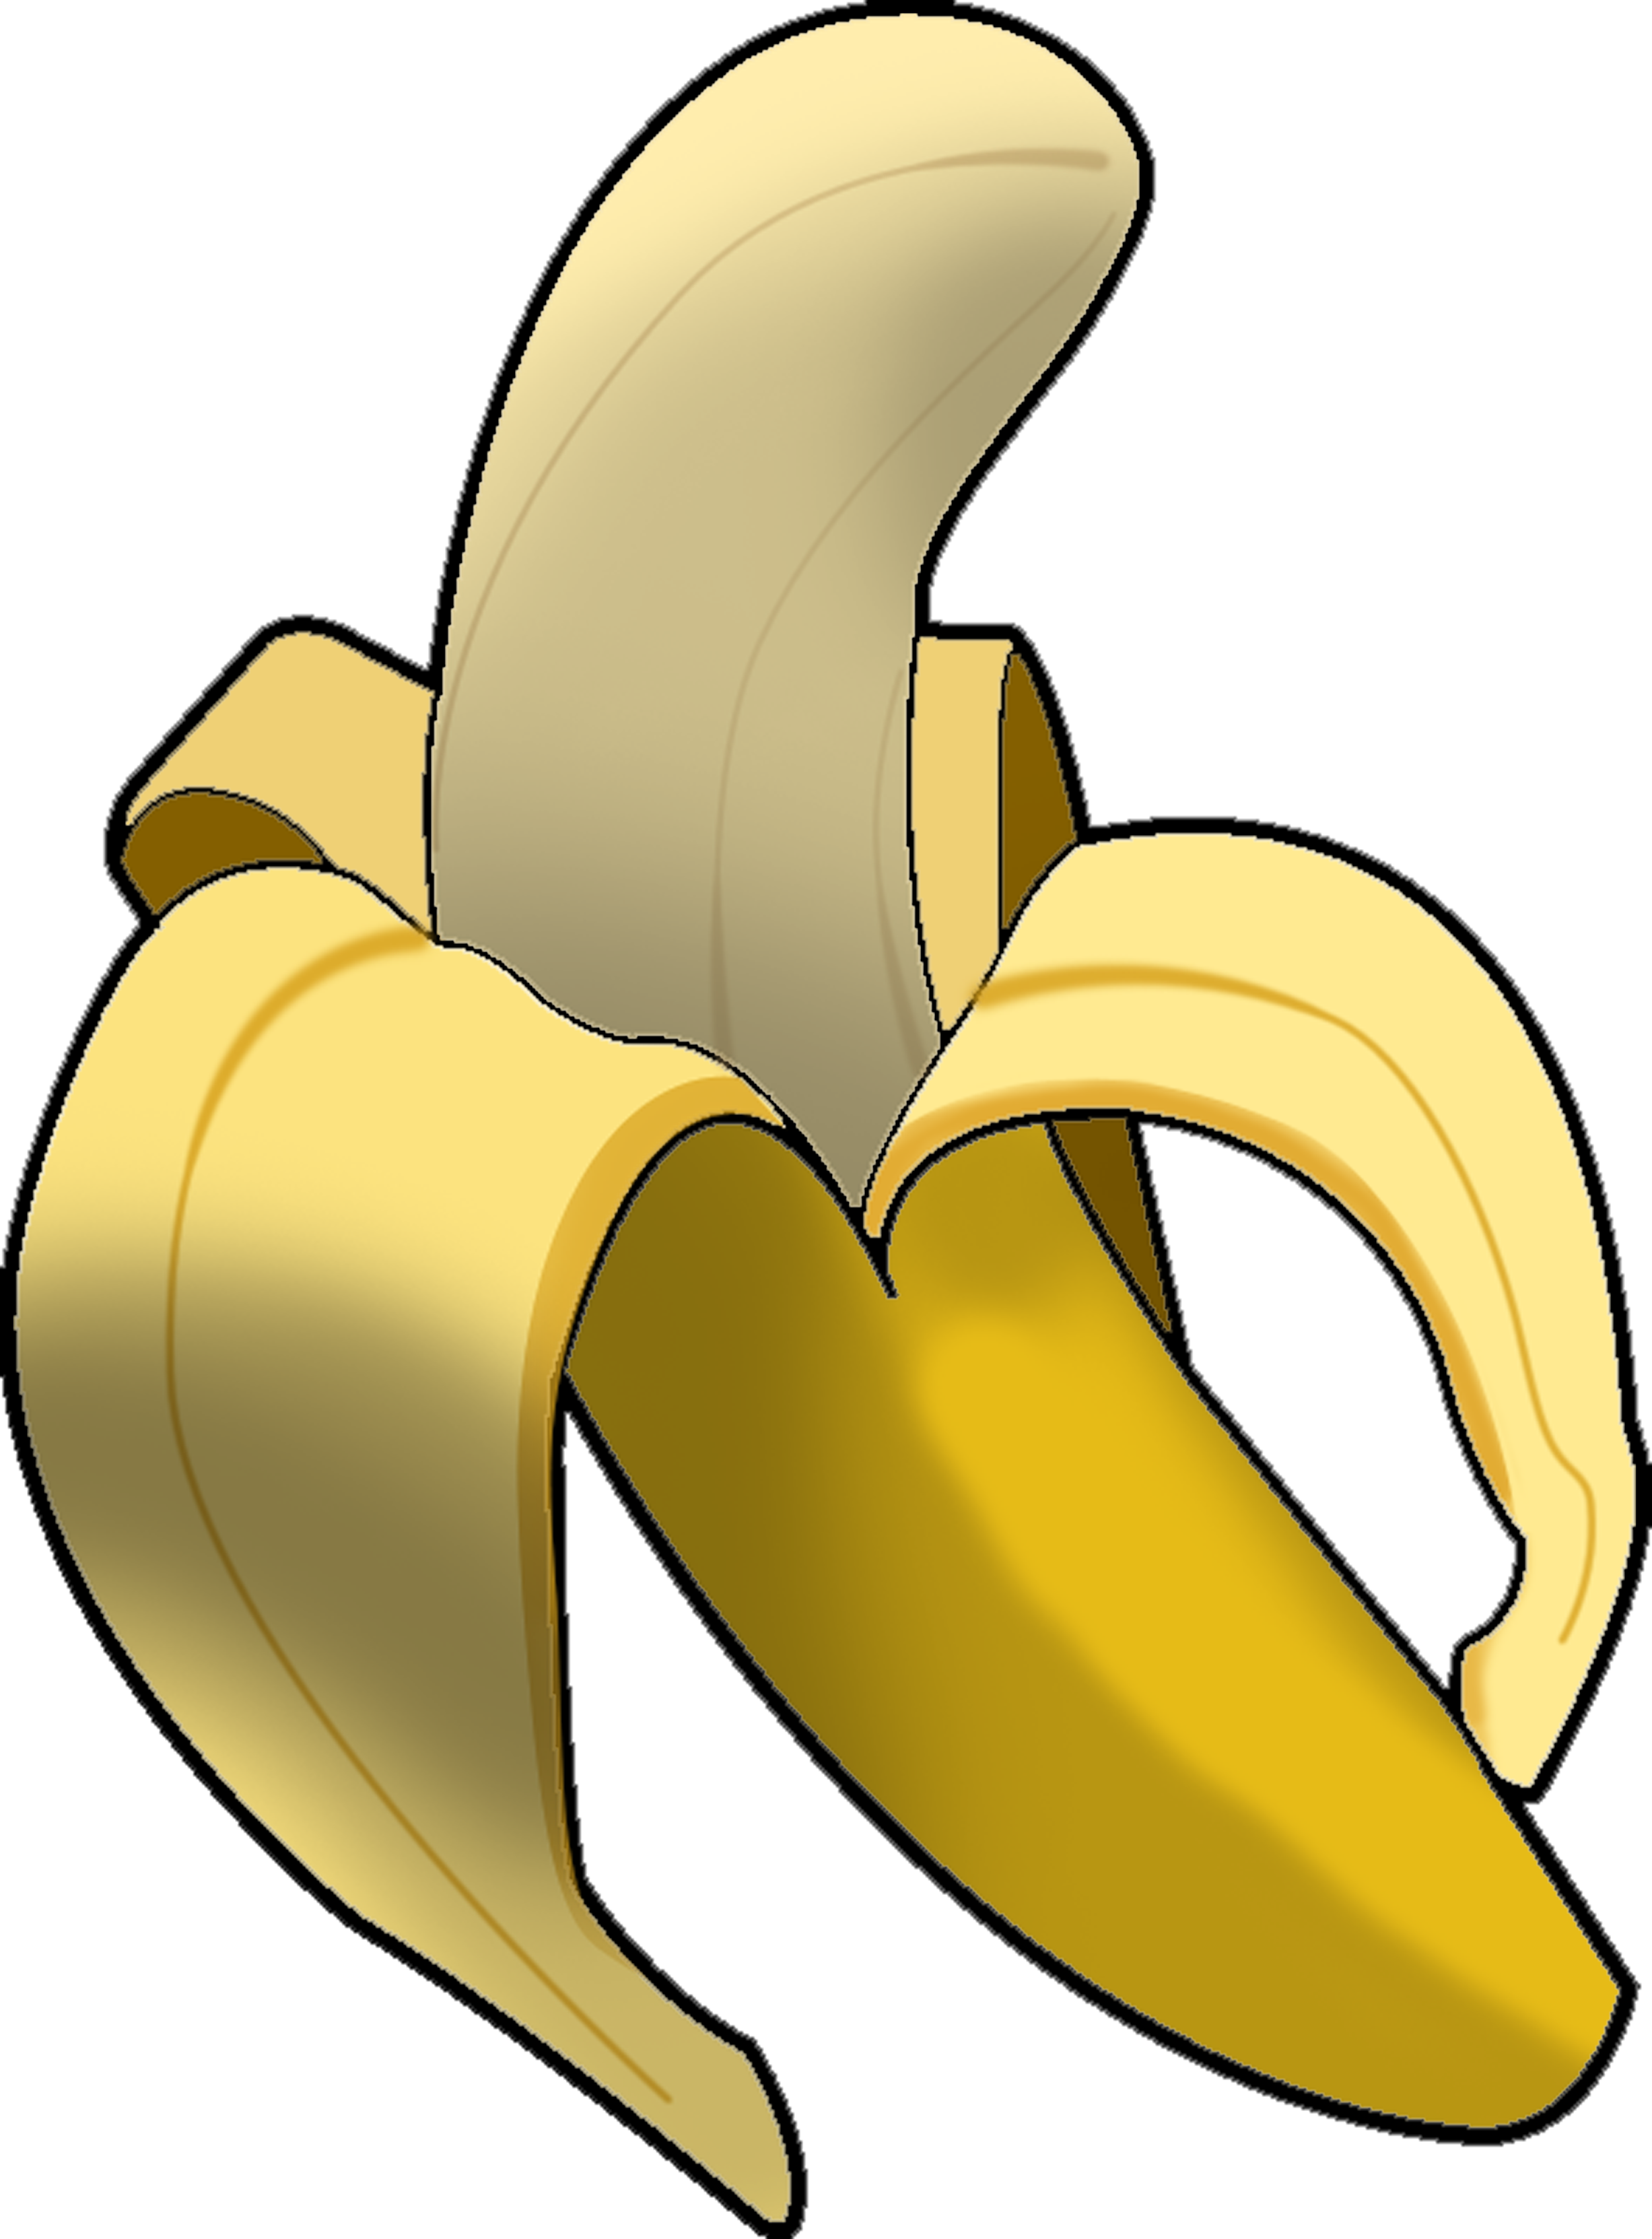 Cartoon Banana Pictures 